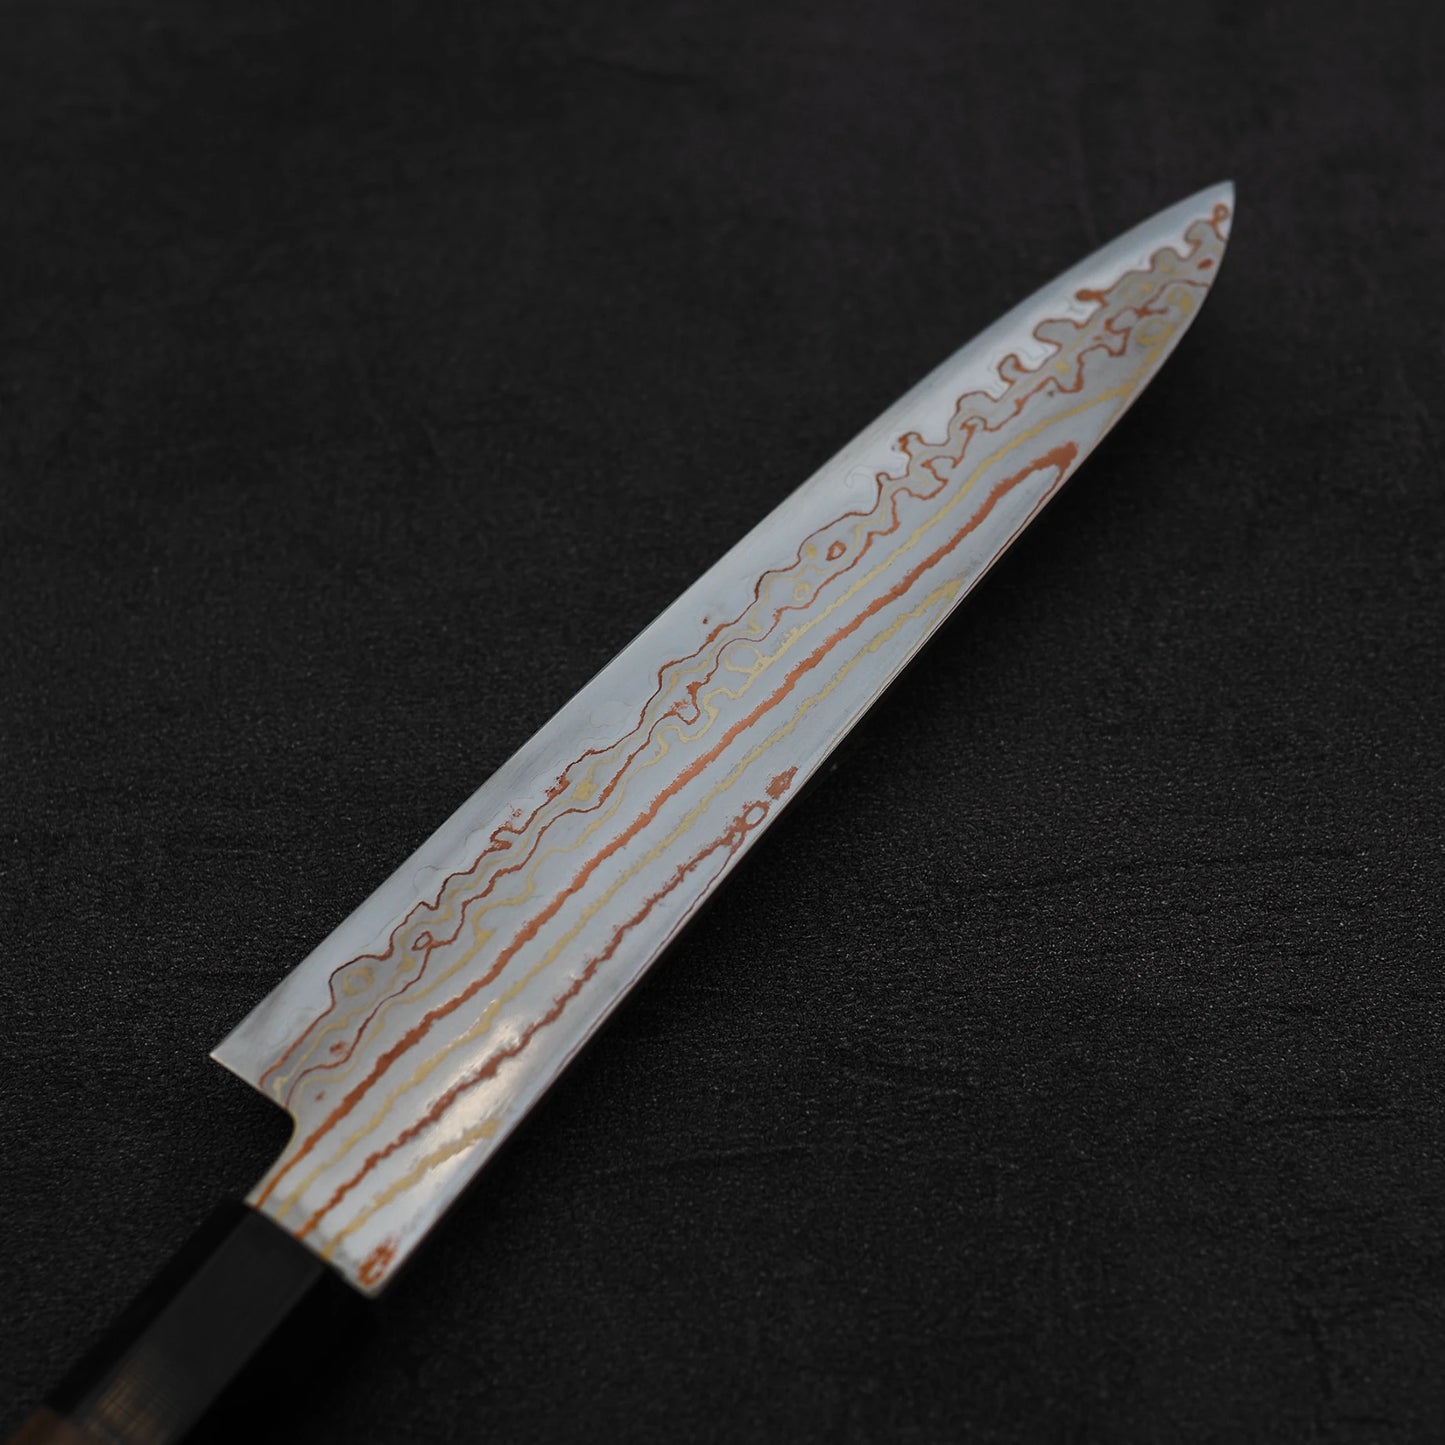 Hatsukokoro Habayusa aogami#2 rainbow damascus petty knife 150mm